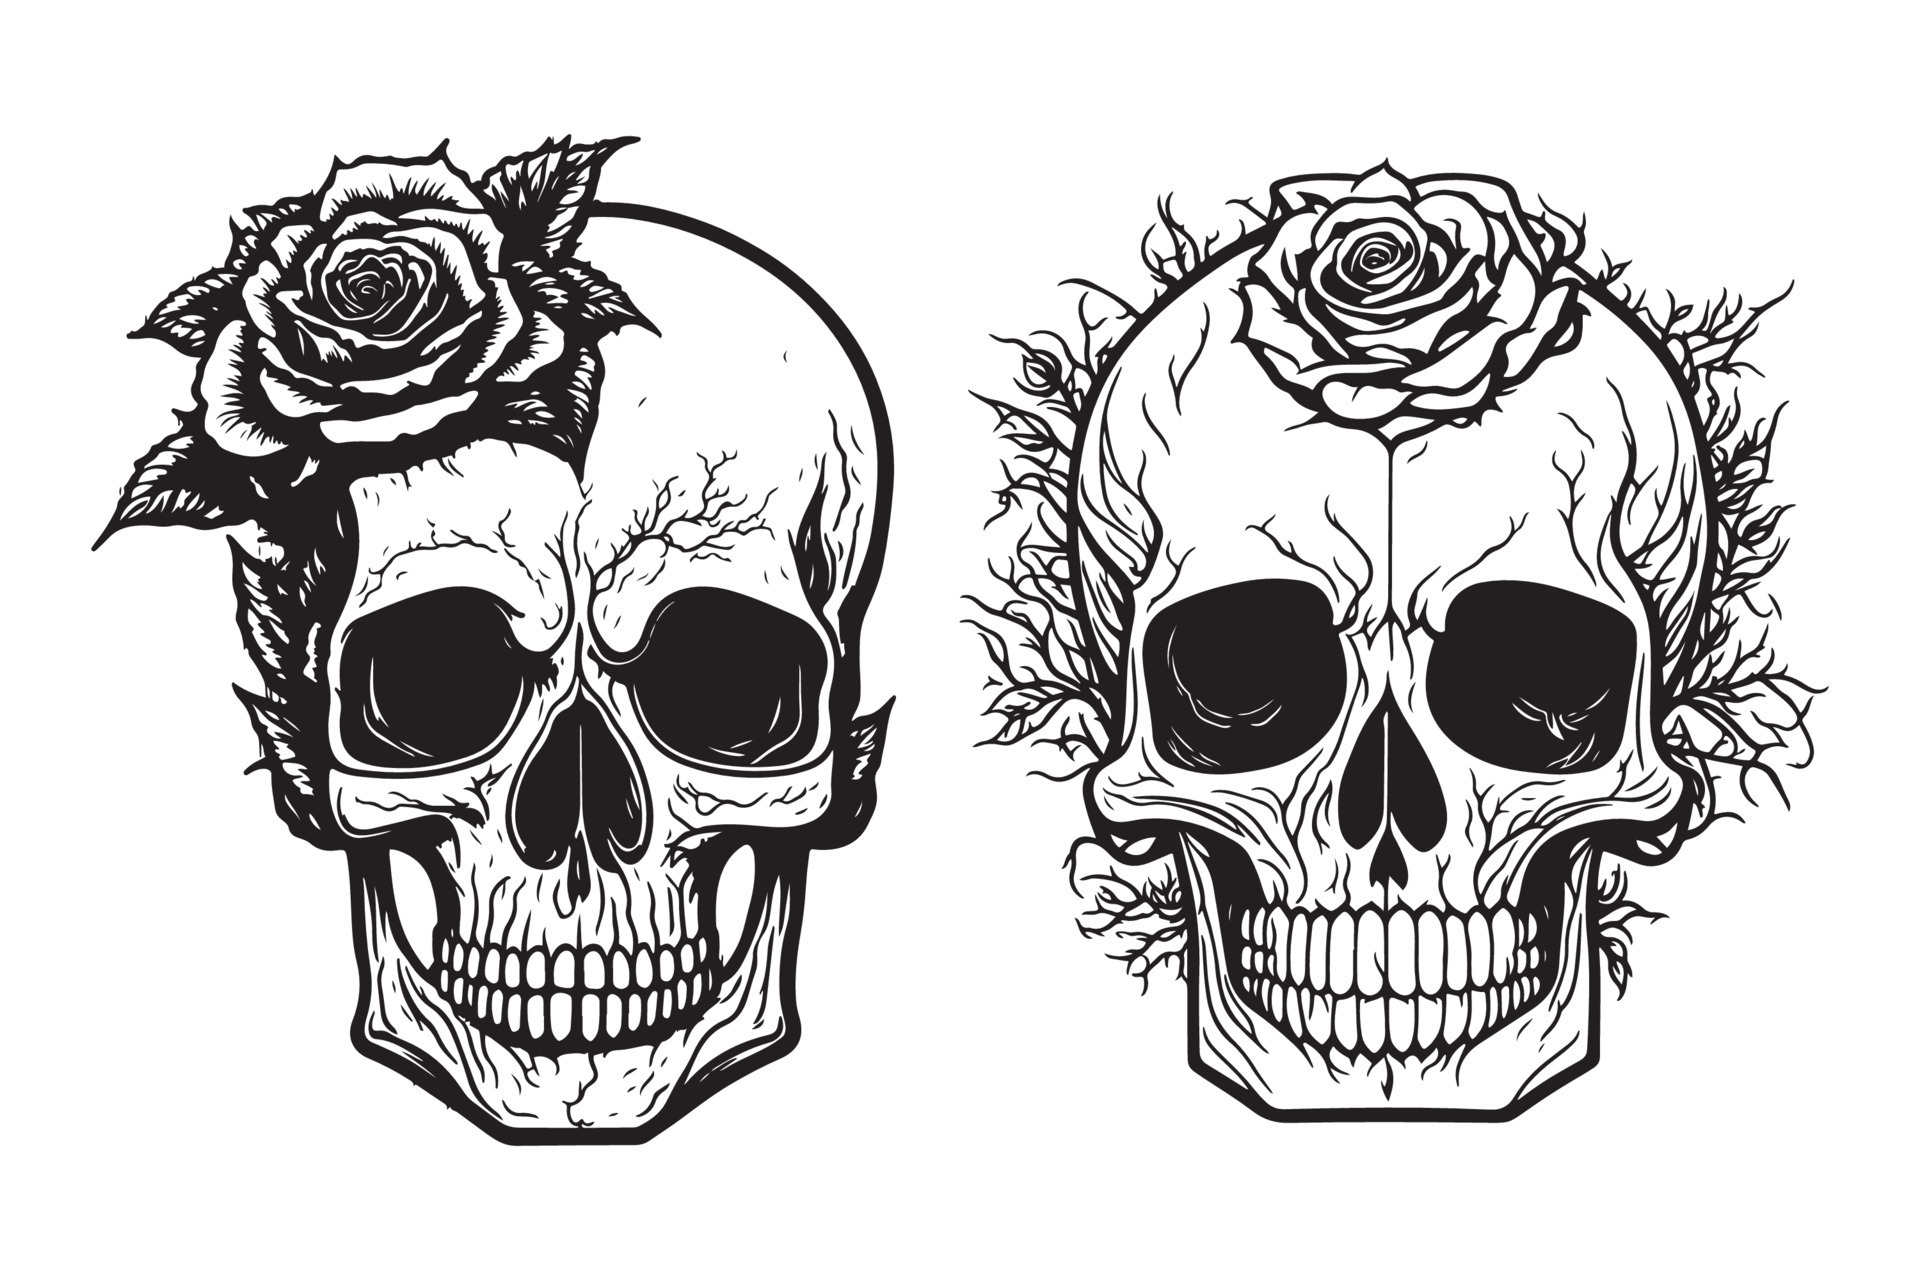 Skull  Roses by Danielle Merricks at Ophelia Bespoke Tattooing in Lytham  UK  rtattoos